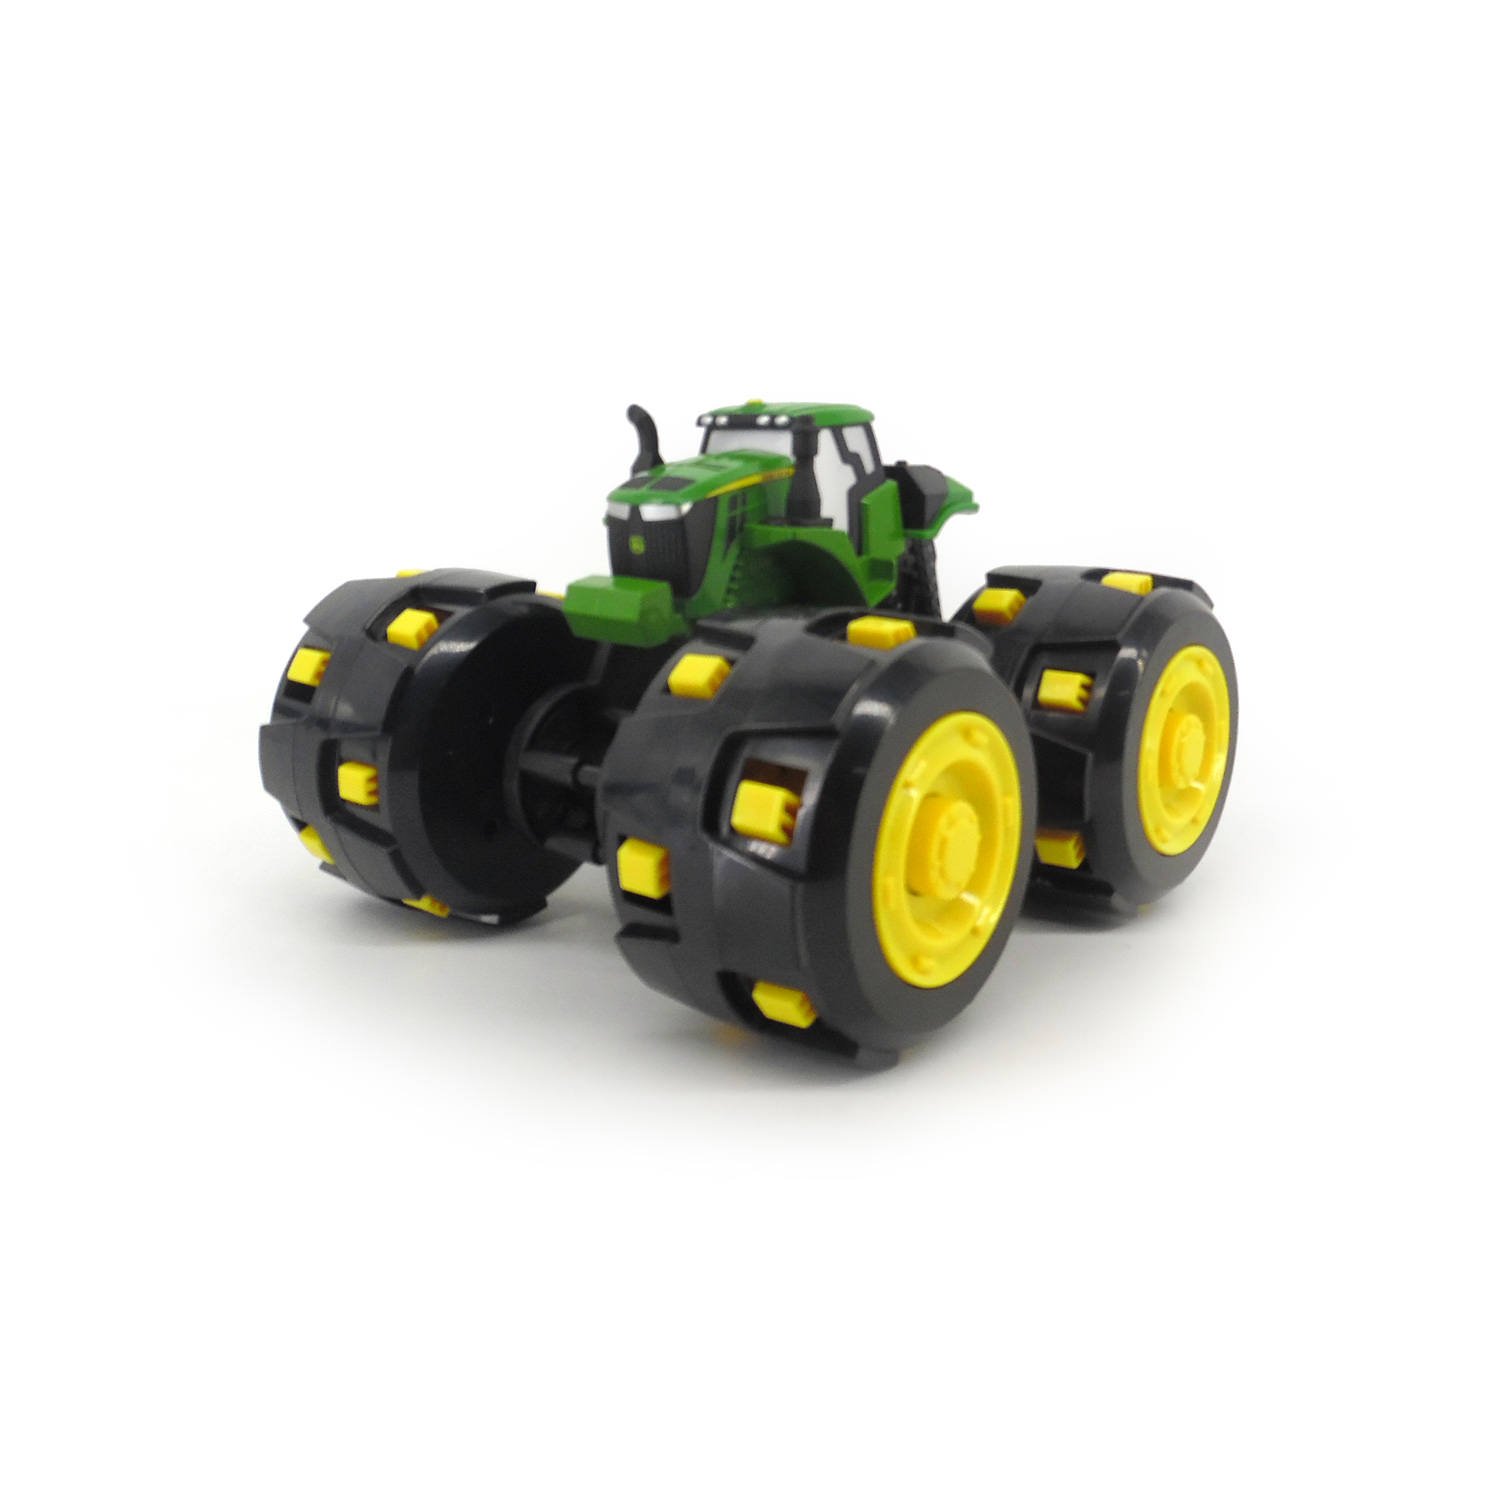 John Deere - Tough Treads Tractor (46712)